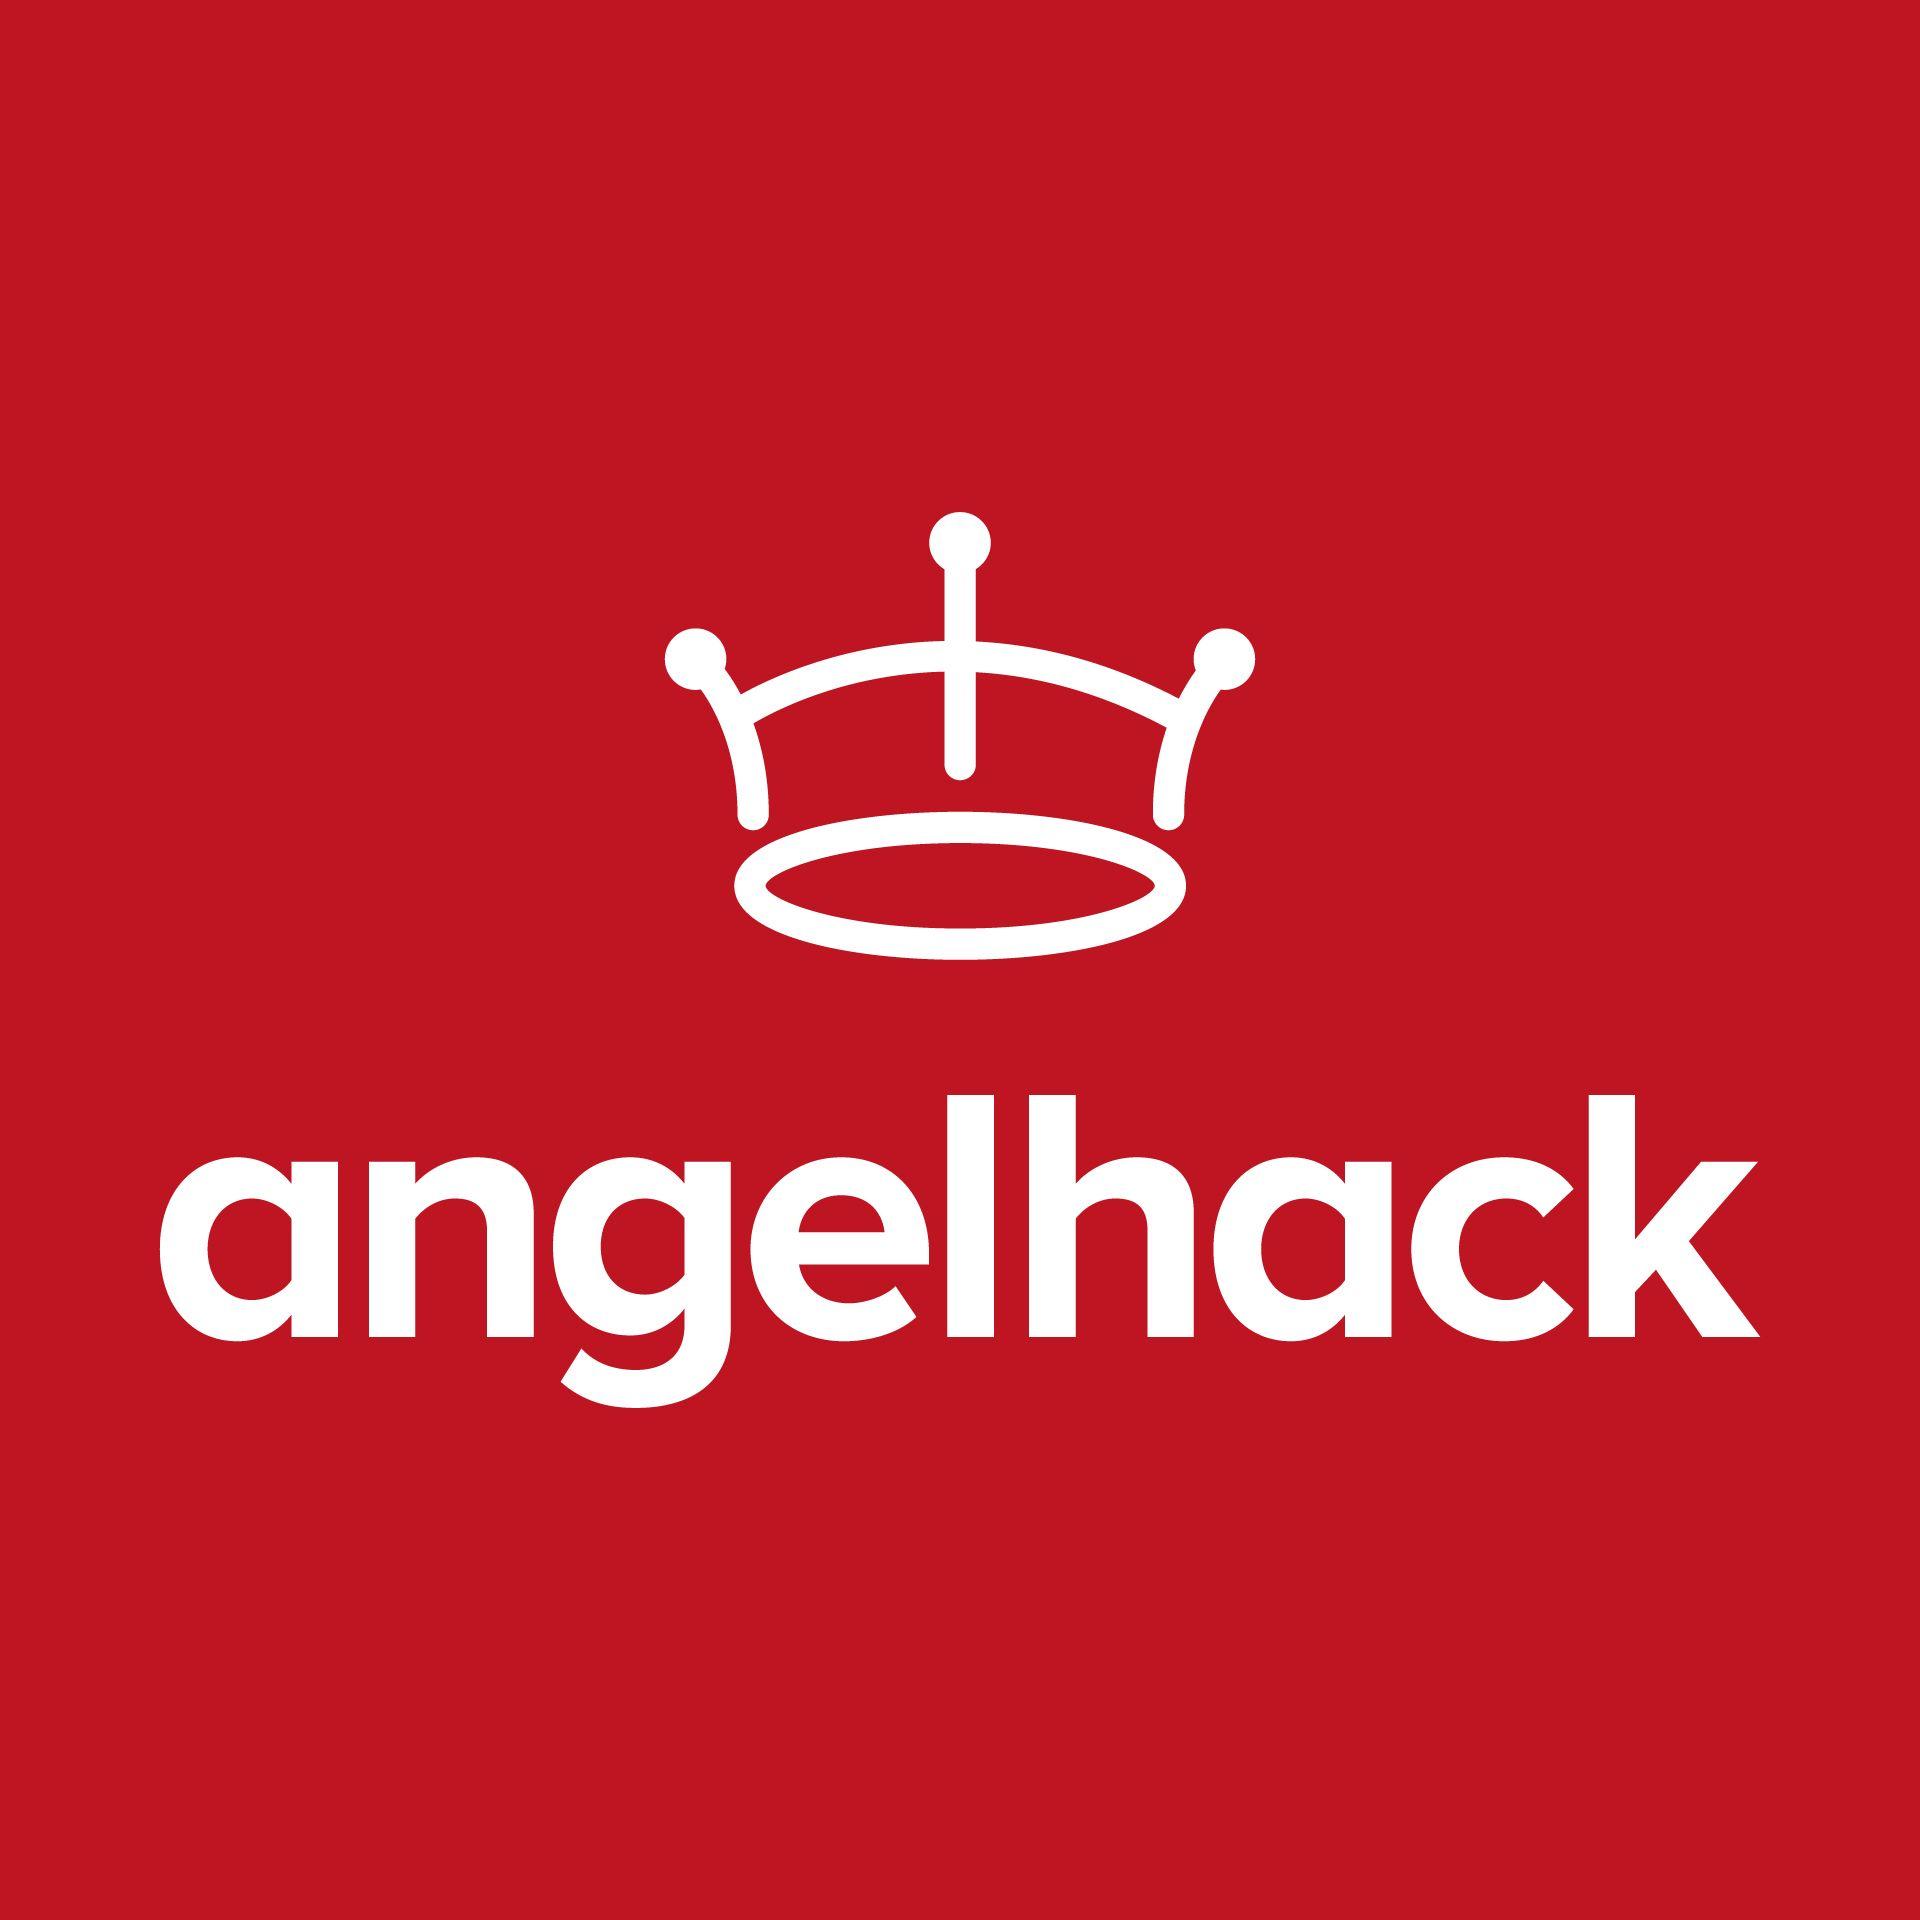 The Square Red Crown Logo - Red top square logo. | AngelHack Logos | Pinterest | Logos, Logo ...